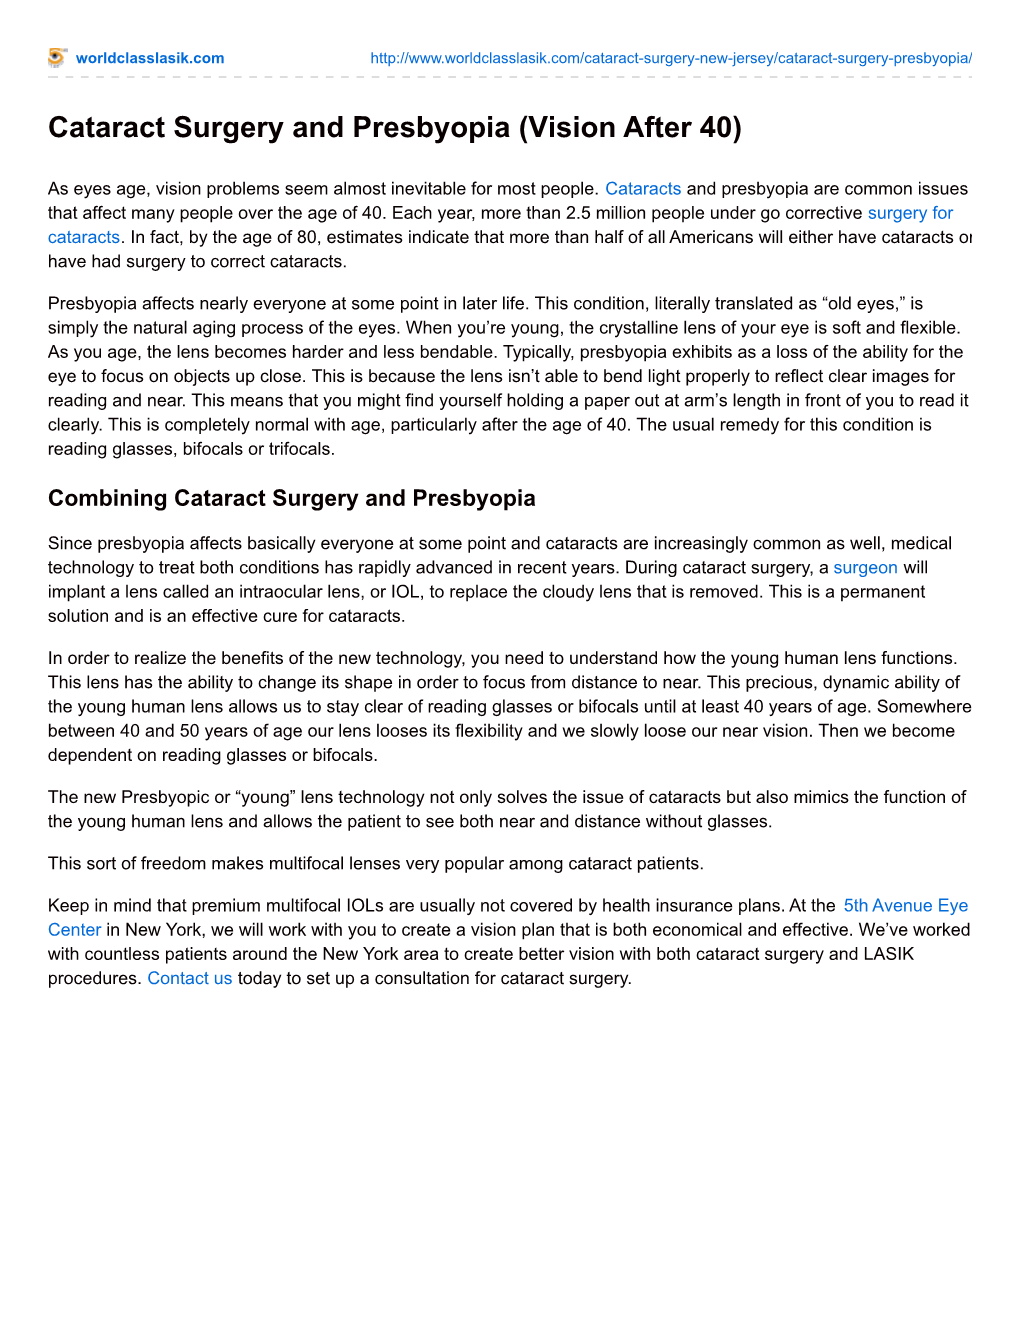 Cataract Surgery and Presbyopia (Vision After 40)